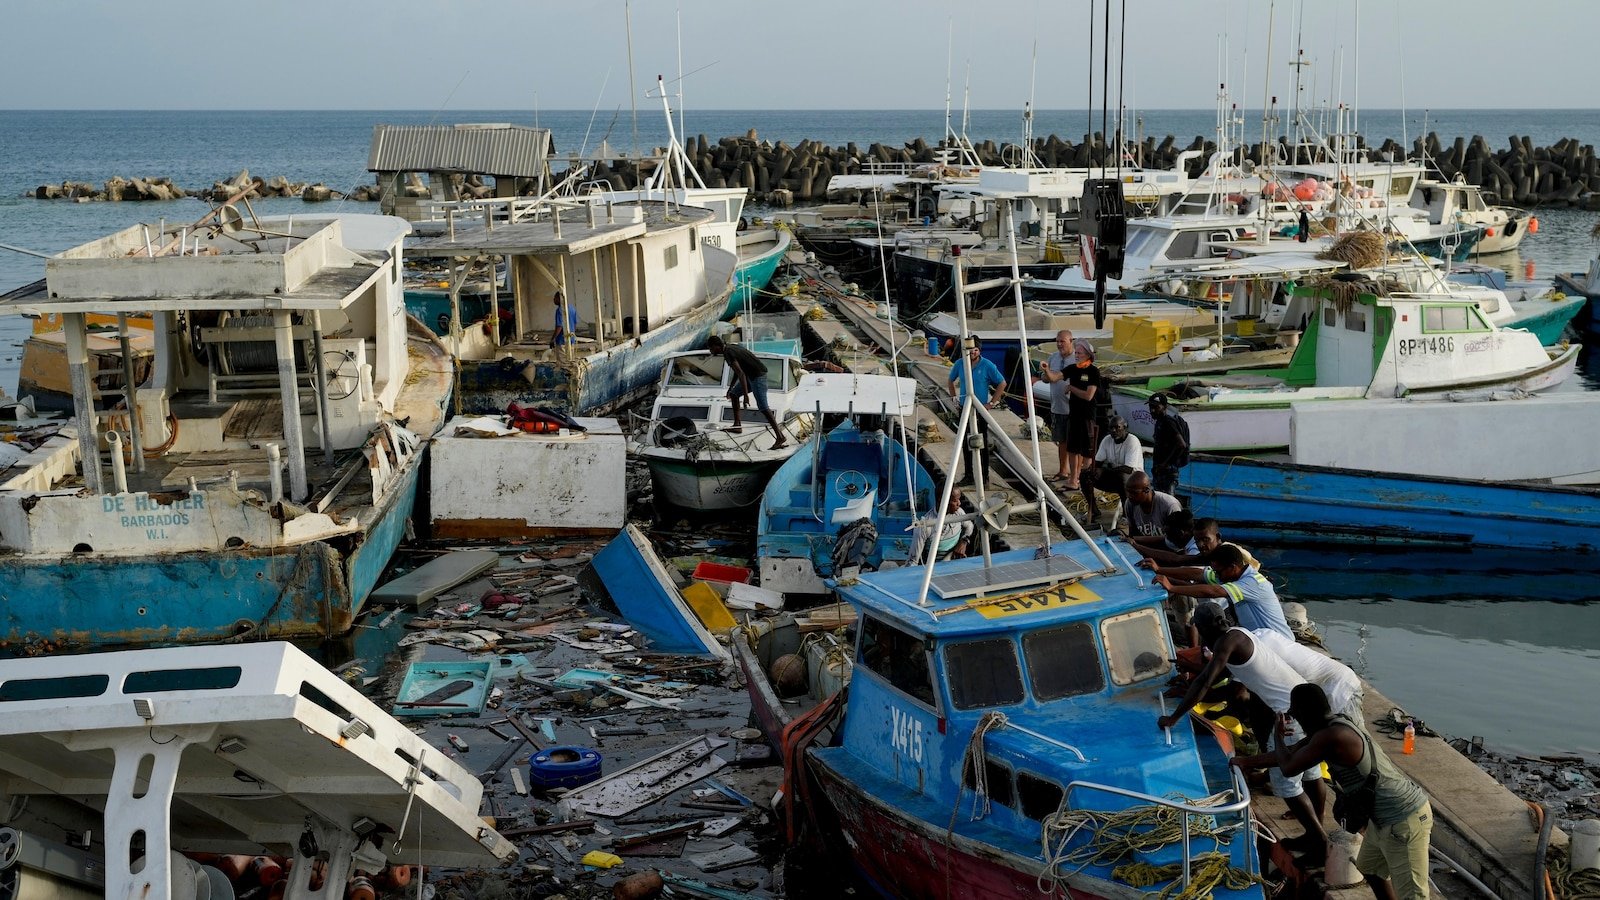 Hurricane Beryl roars toward Jamaica after killing at least 6 people in the southeast Caribbean